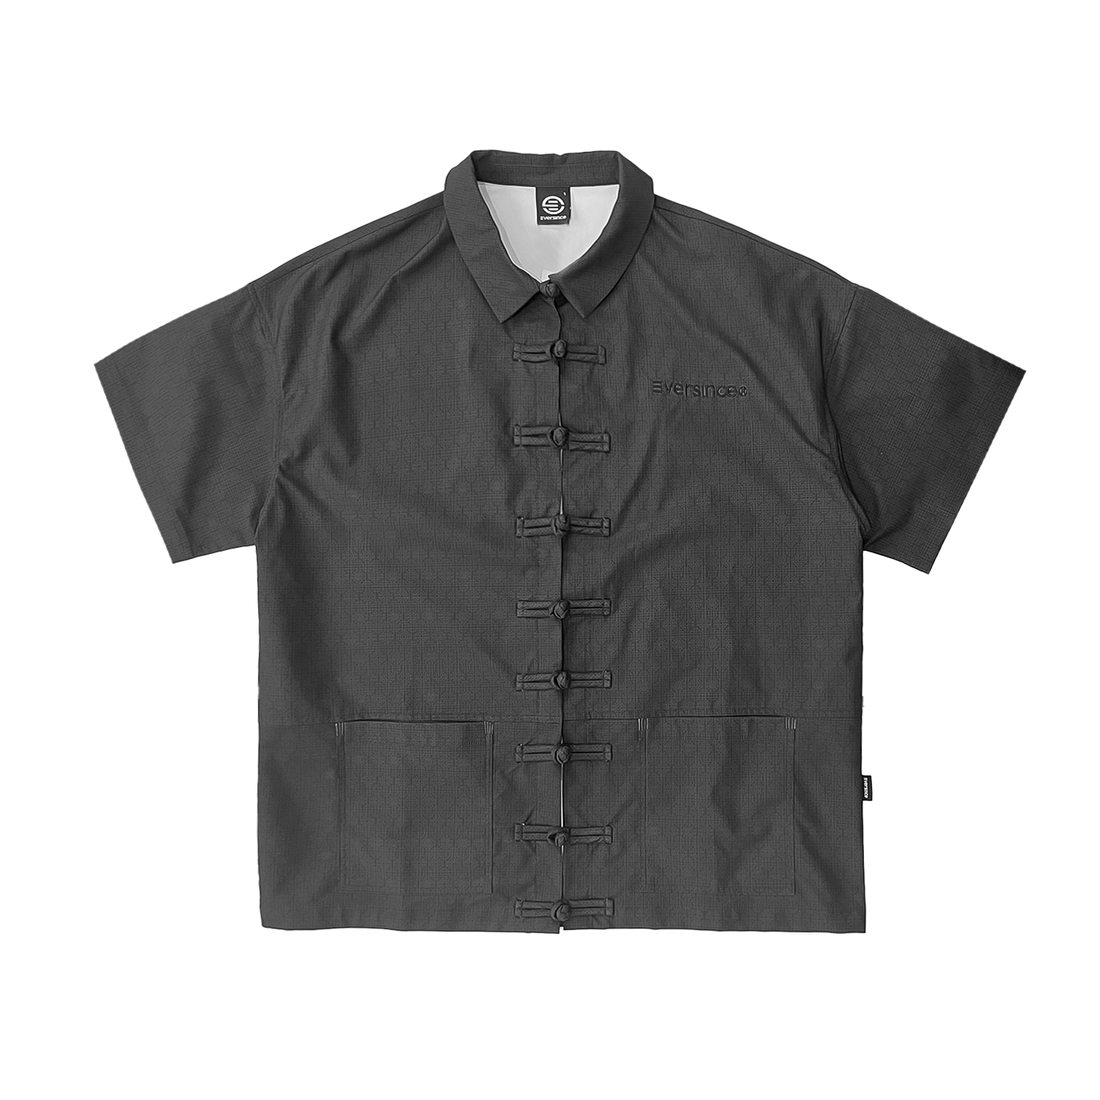 Eversince | Tarragon Shirt Black